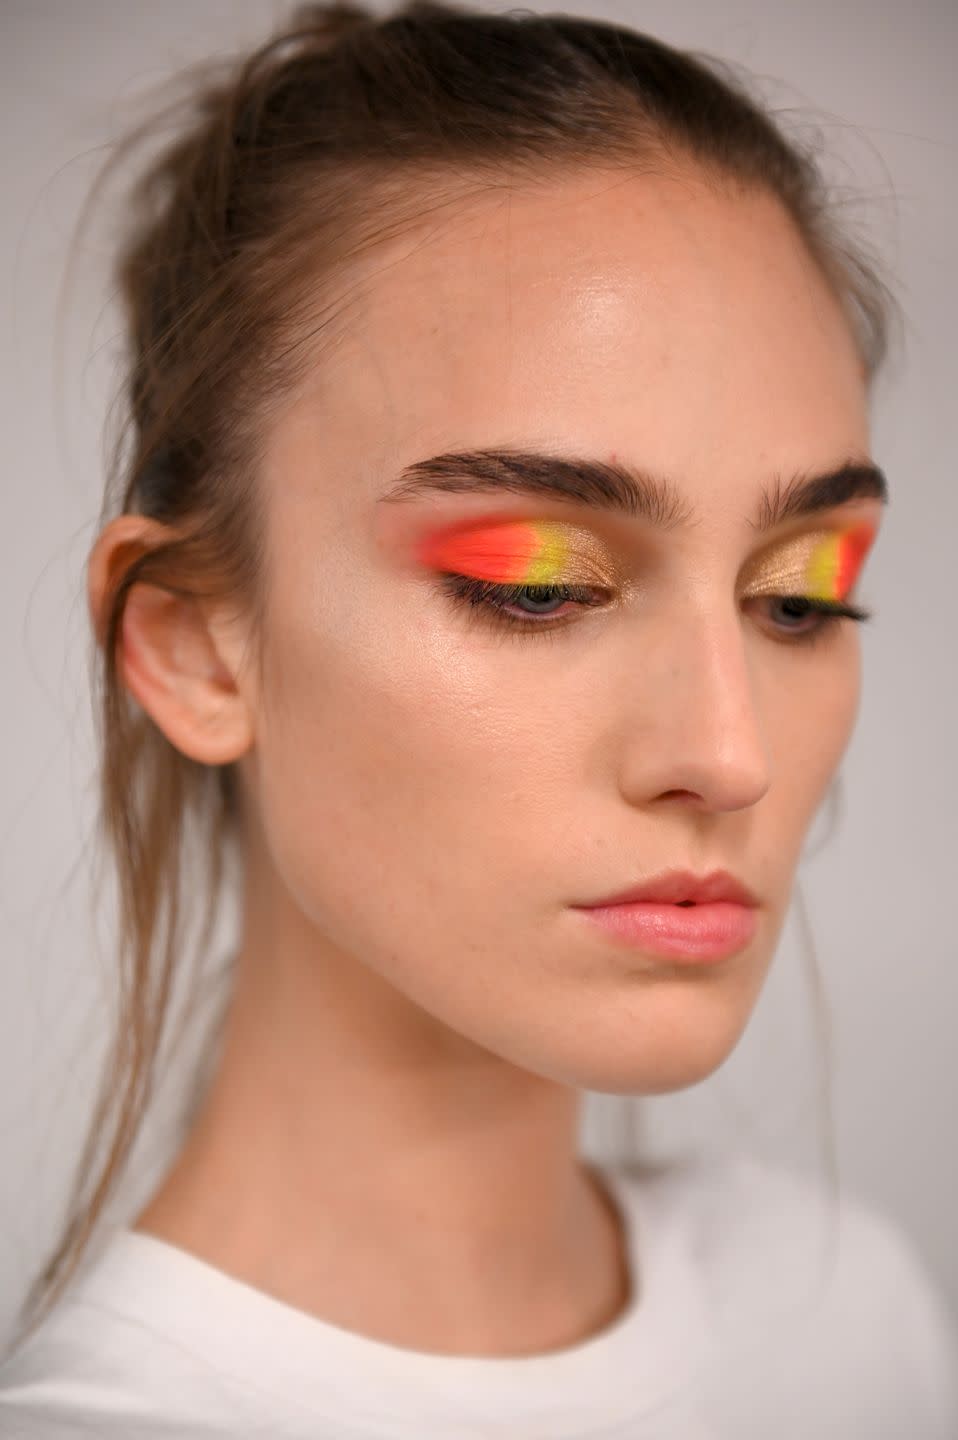 9) Spring 2020 Makeup Trend: Ombré Eyeshadow